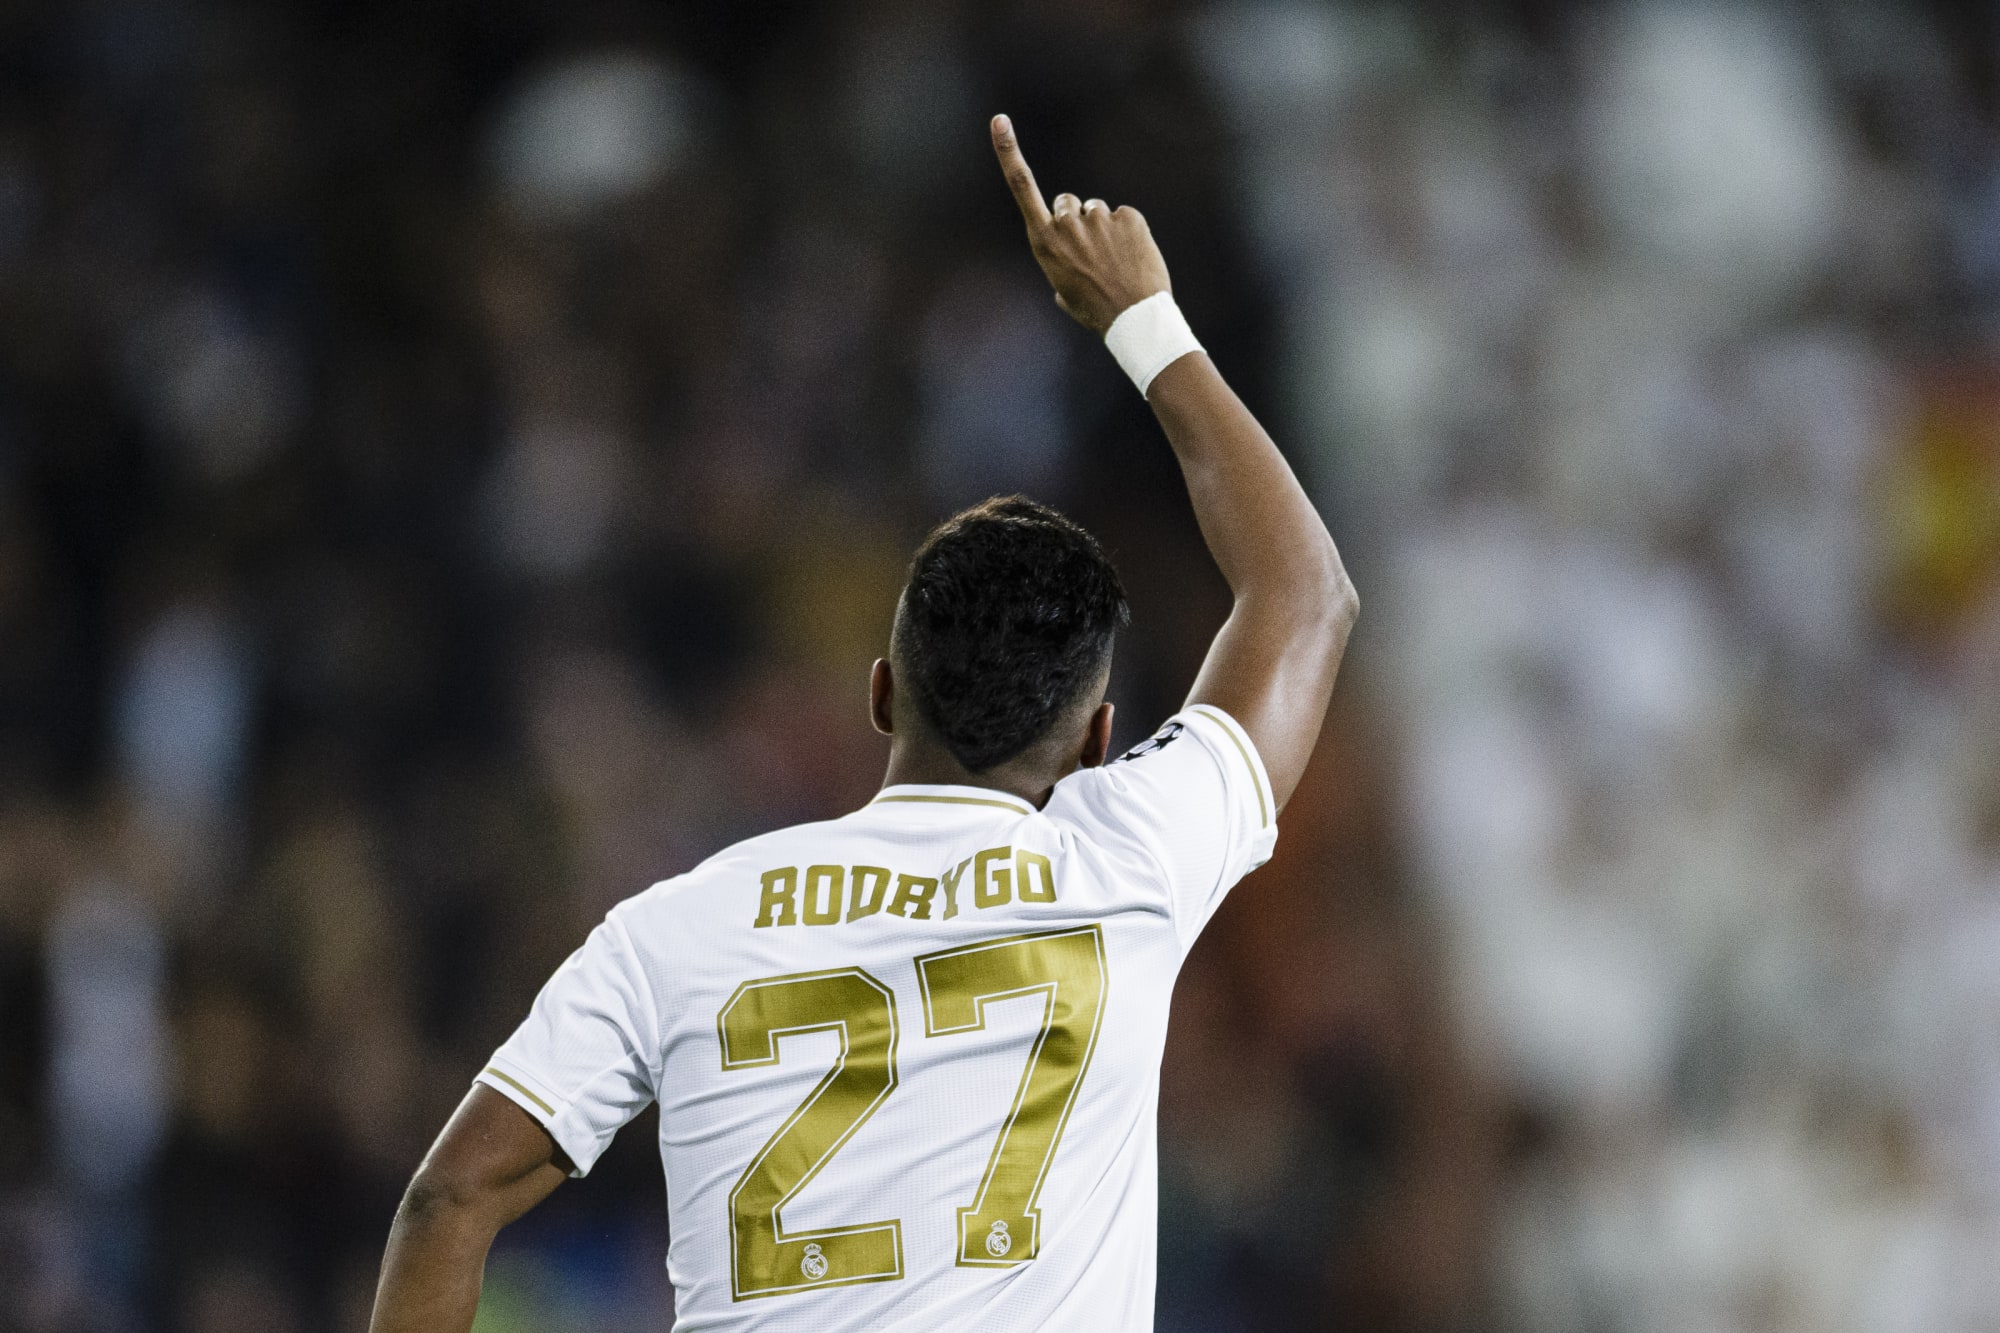 Real Madrid player ratings vs Galatasaray: Rodrygo shines with hat